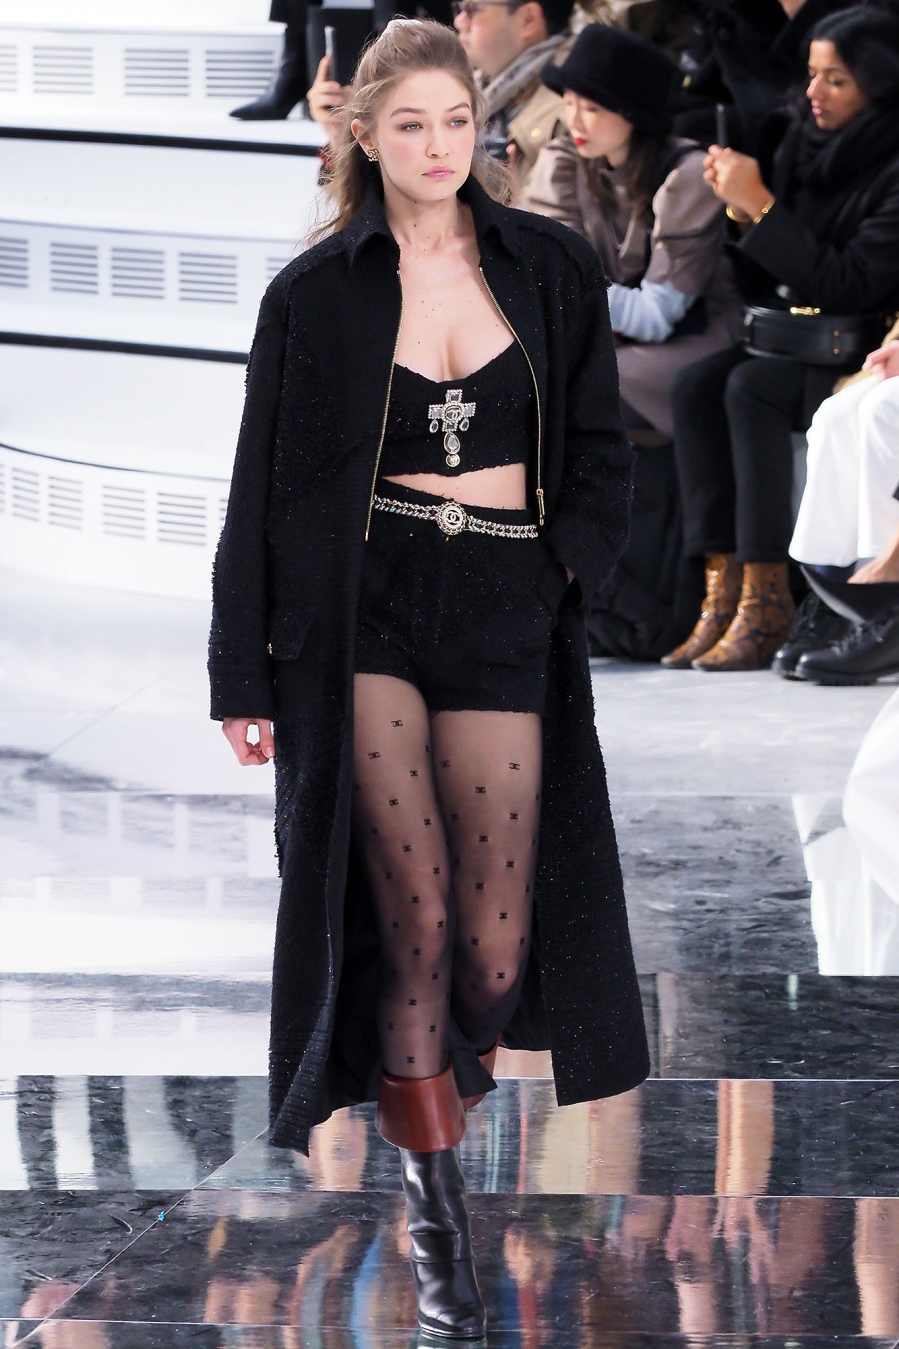 Gigi Hadid Chanel Paris Fashion Week Pregnant Models Walking the Runway